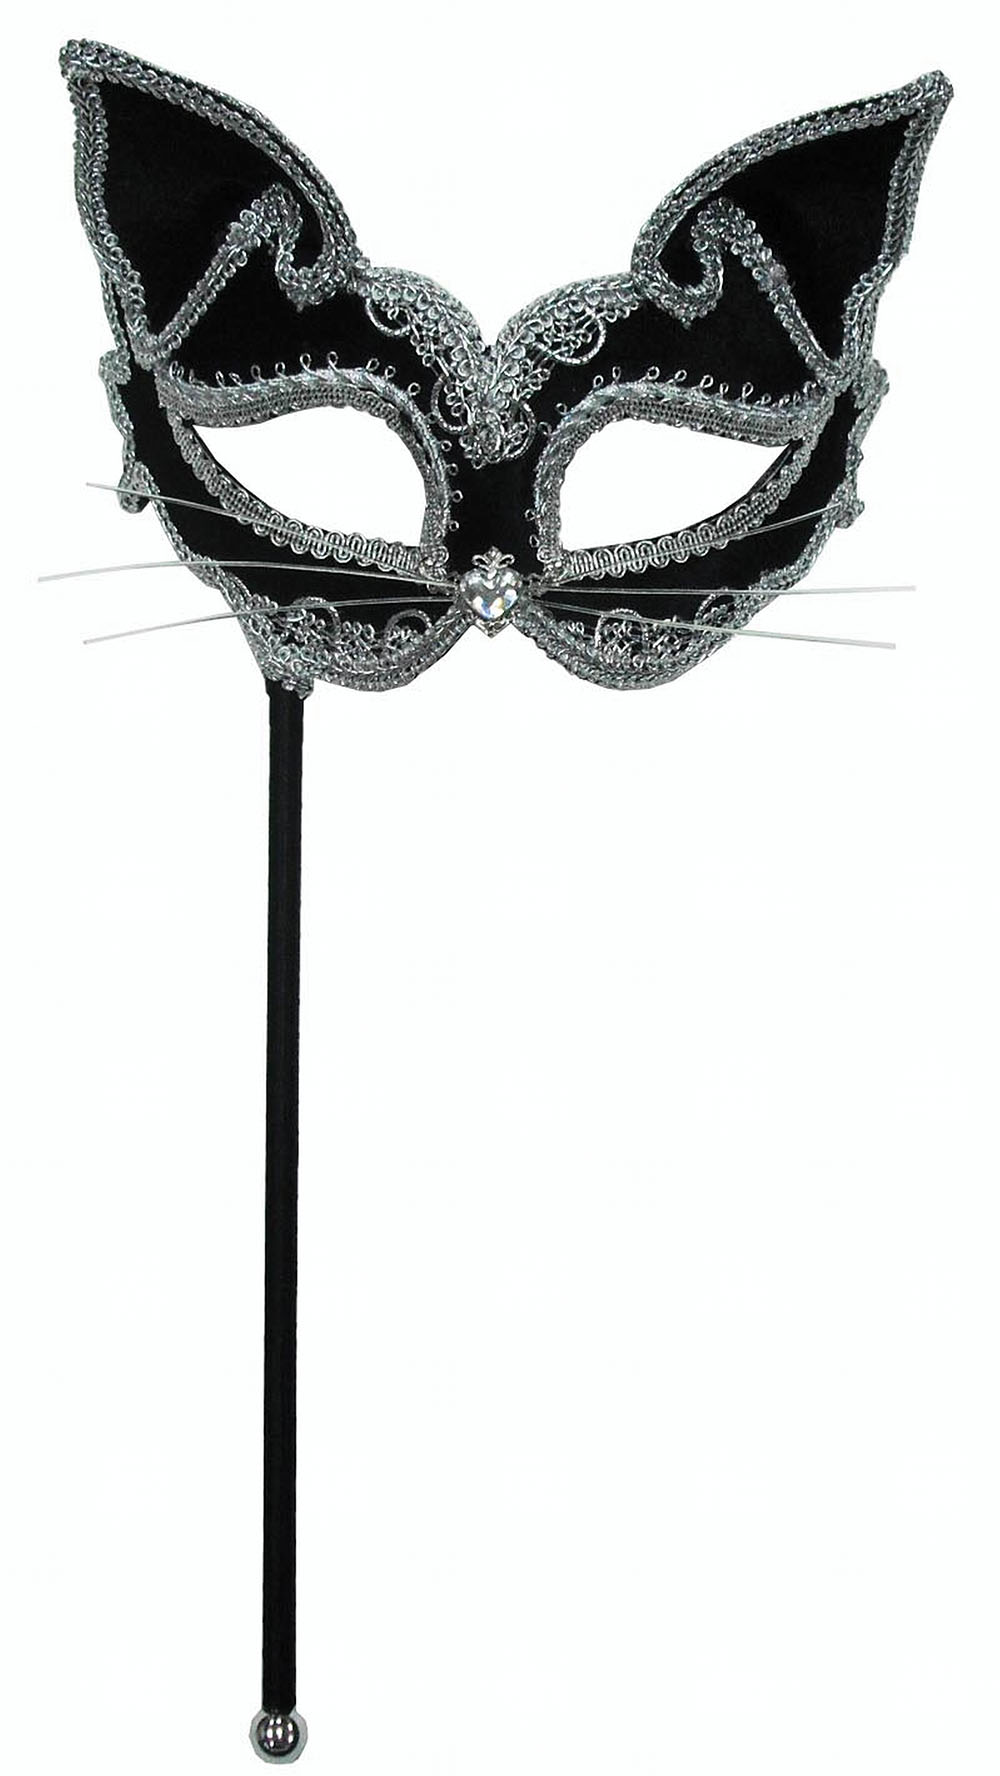 Cat Mask On Stick